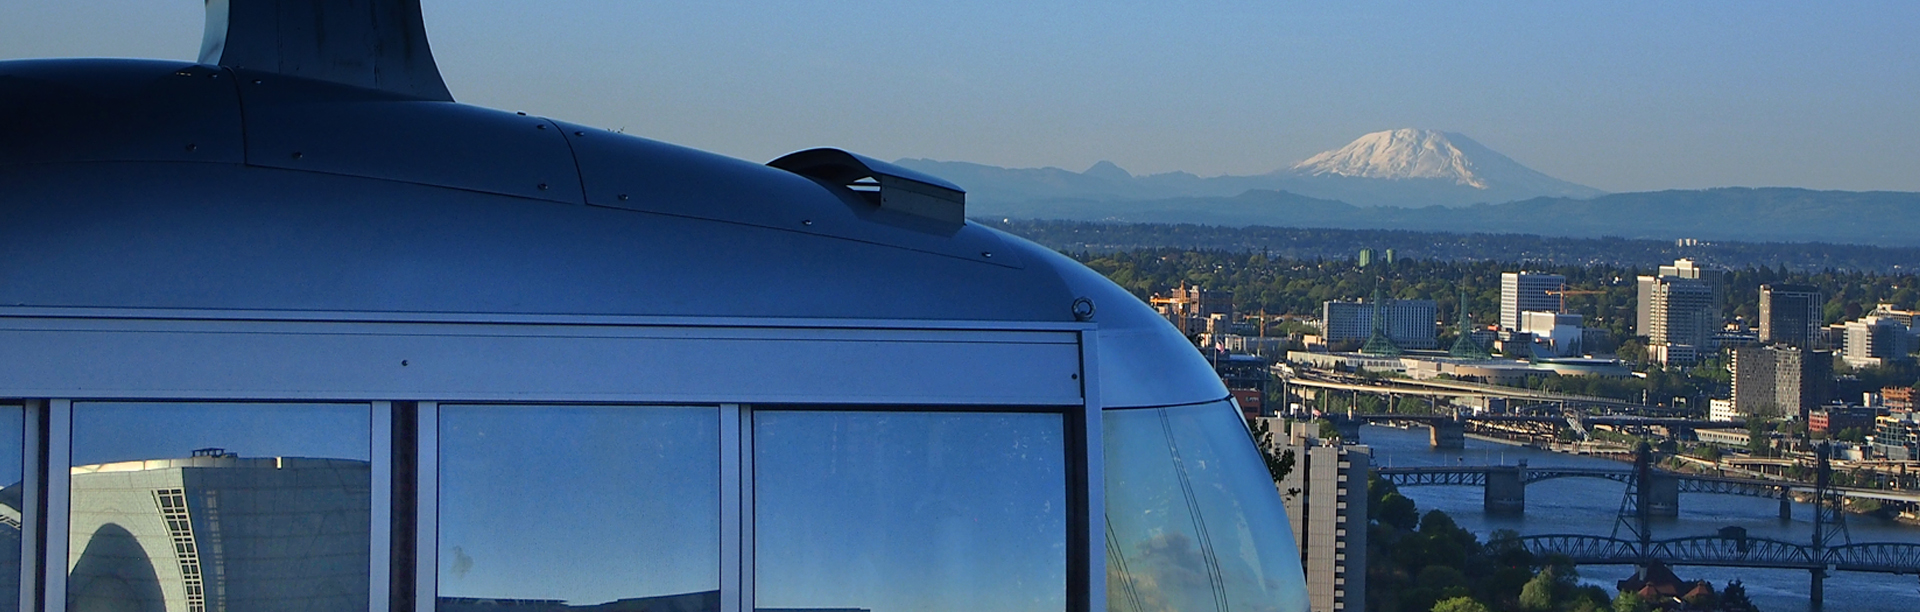 The Tram, Portland and Mount Saint Helens